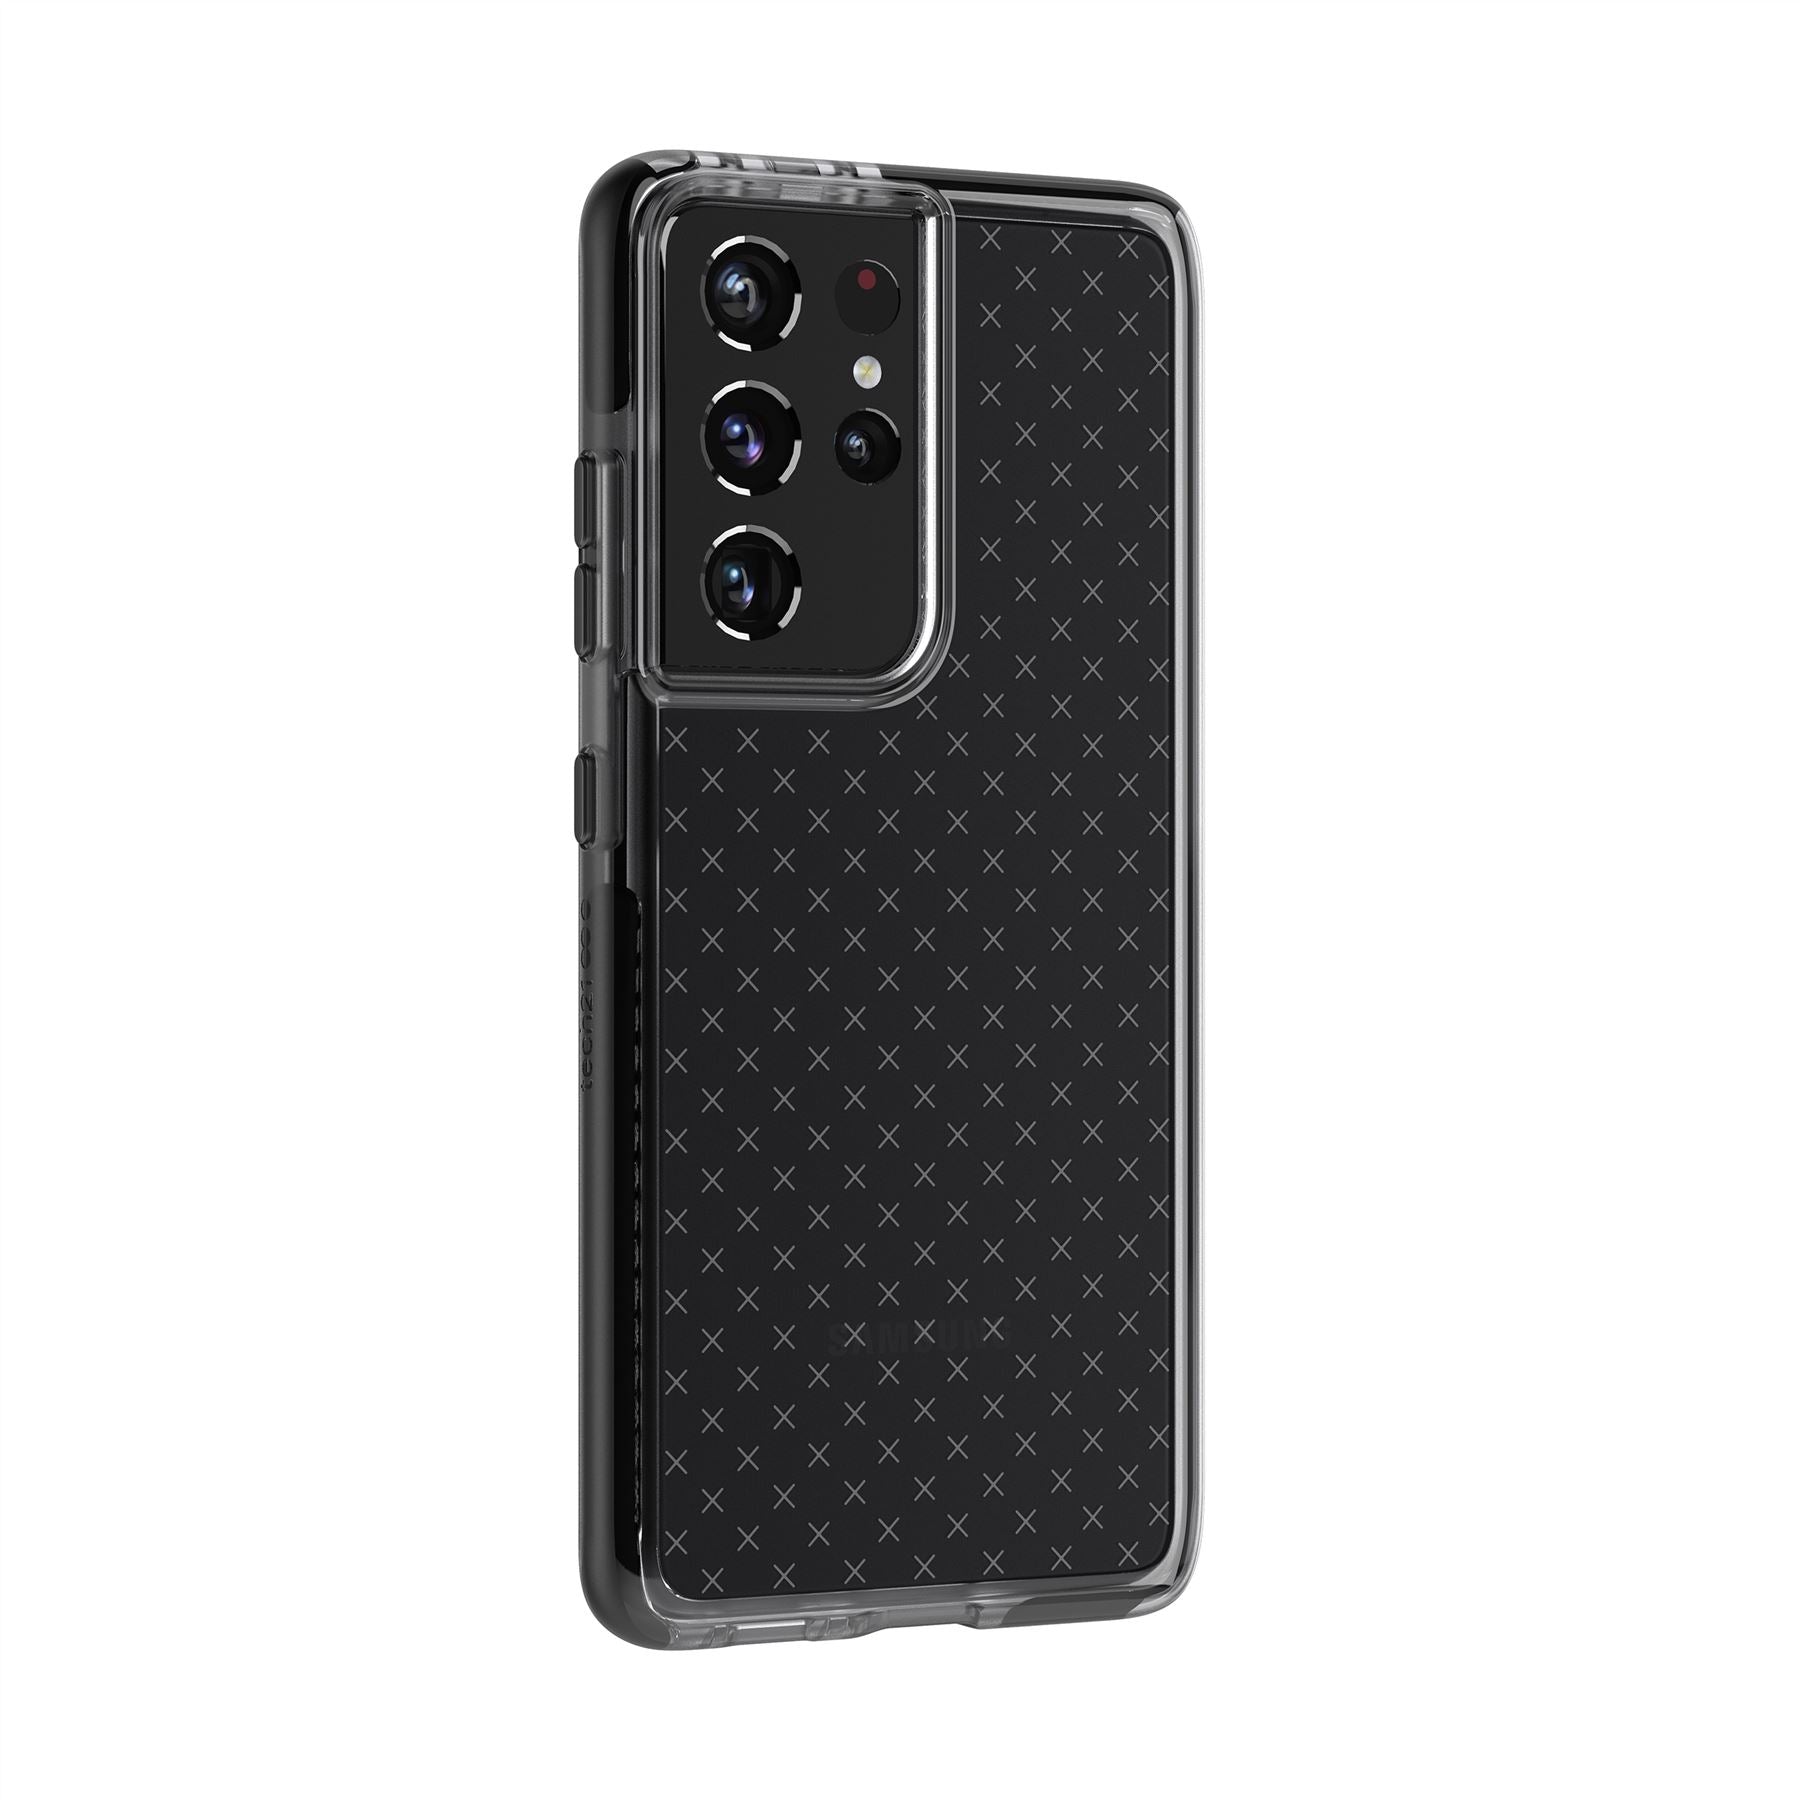 Evo Check - Samsung Galaxy S21 Ultra 5G Case - Smokey Black